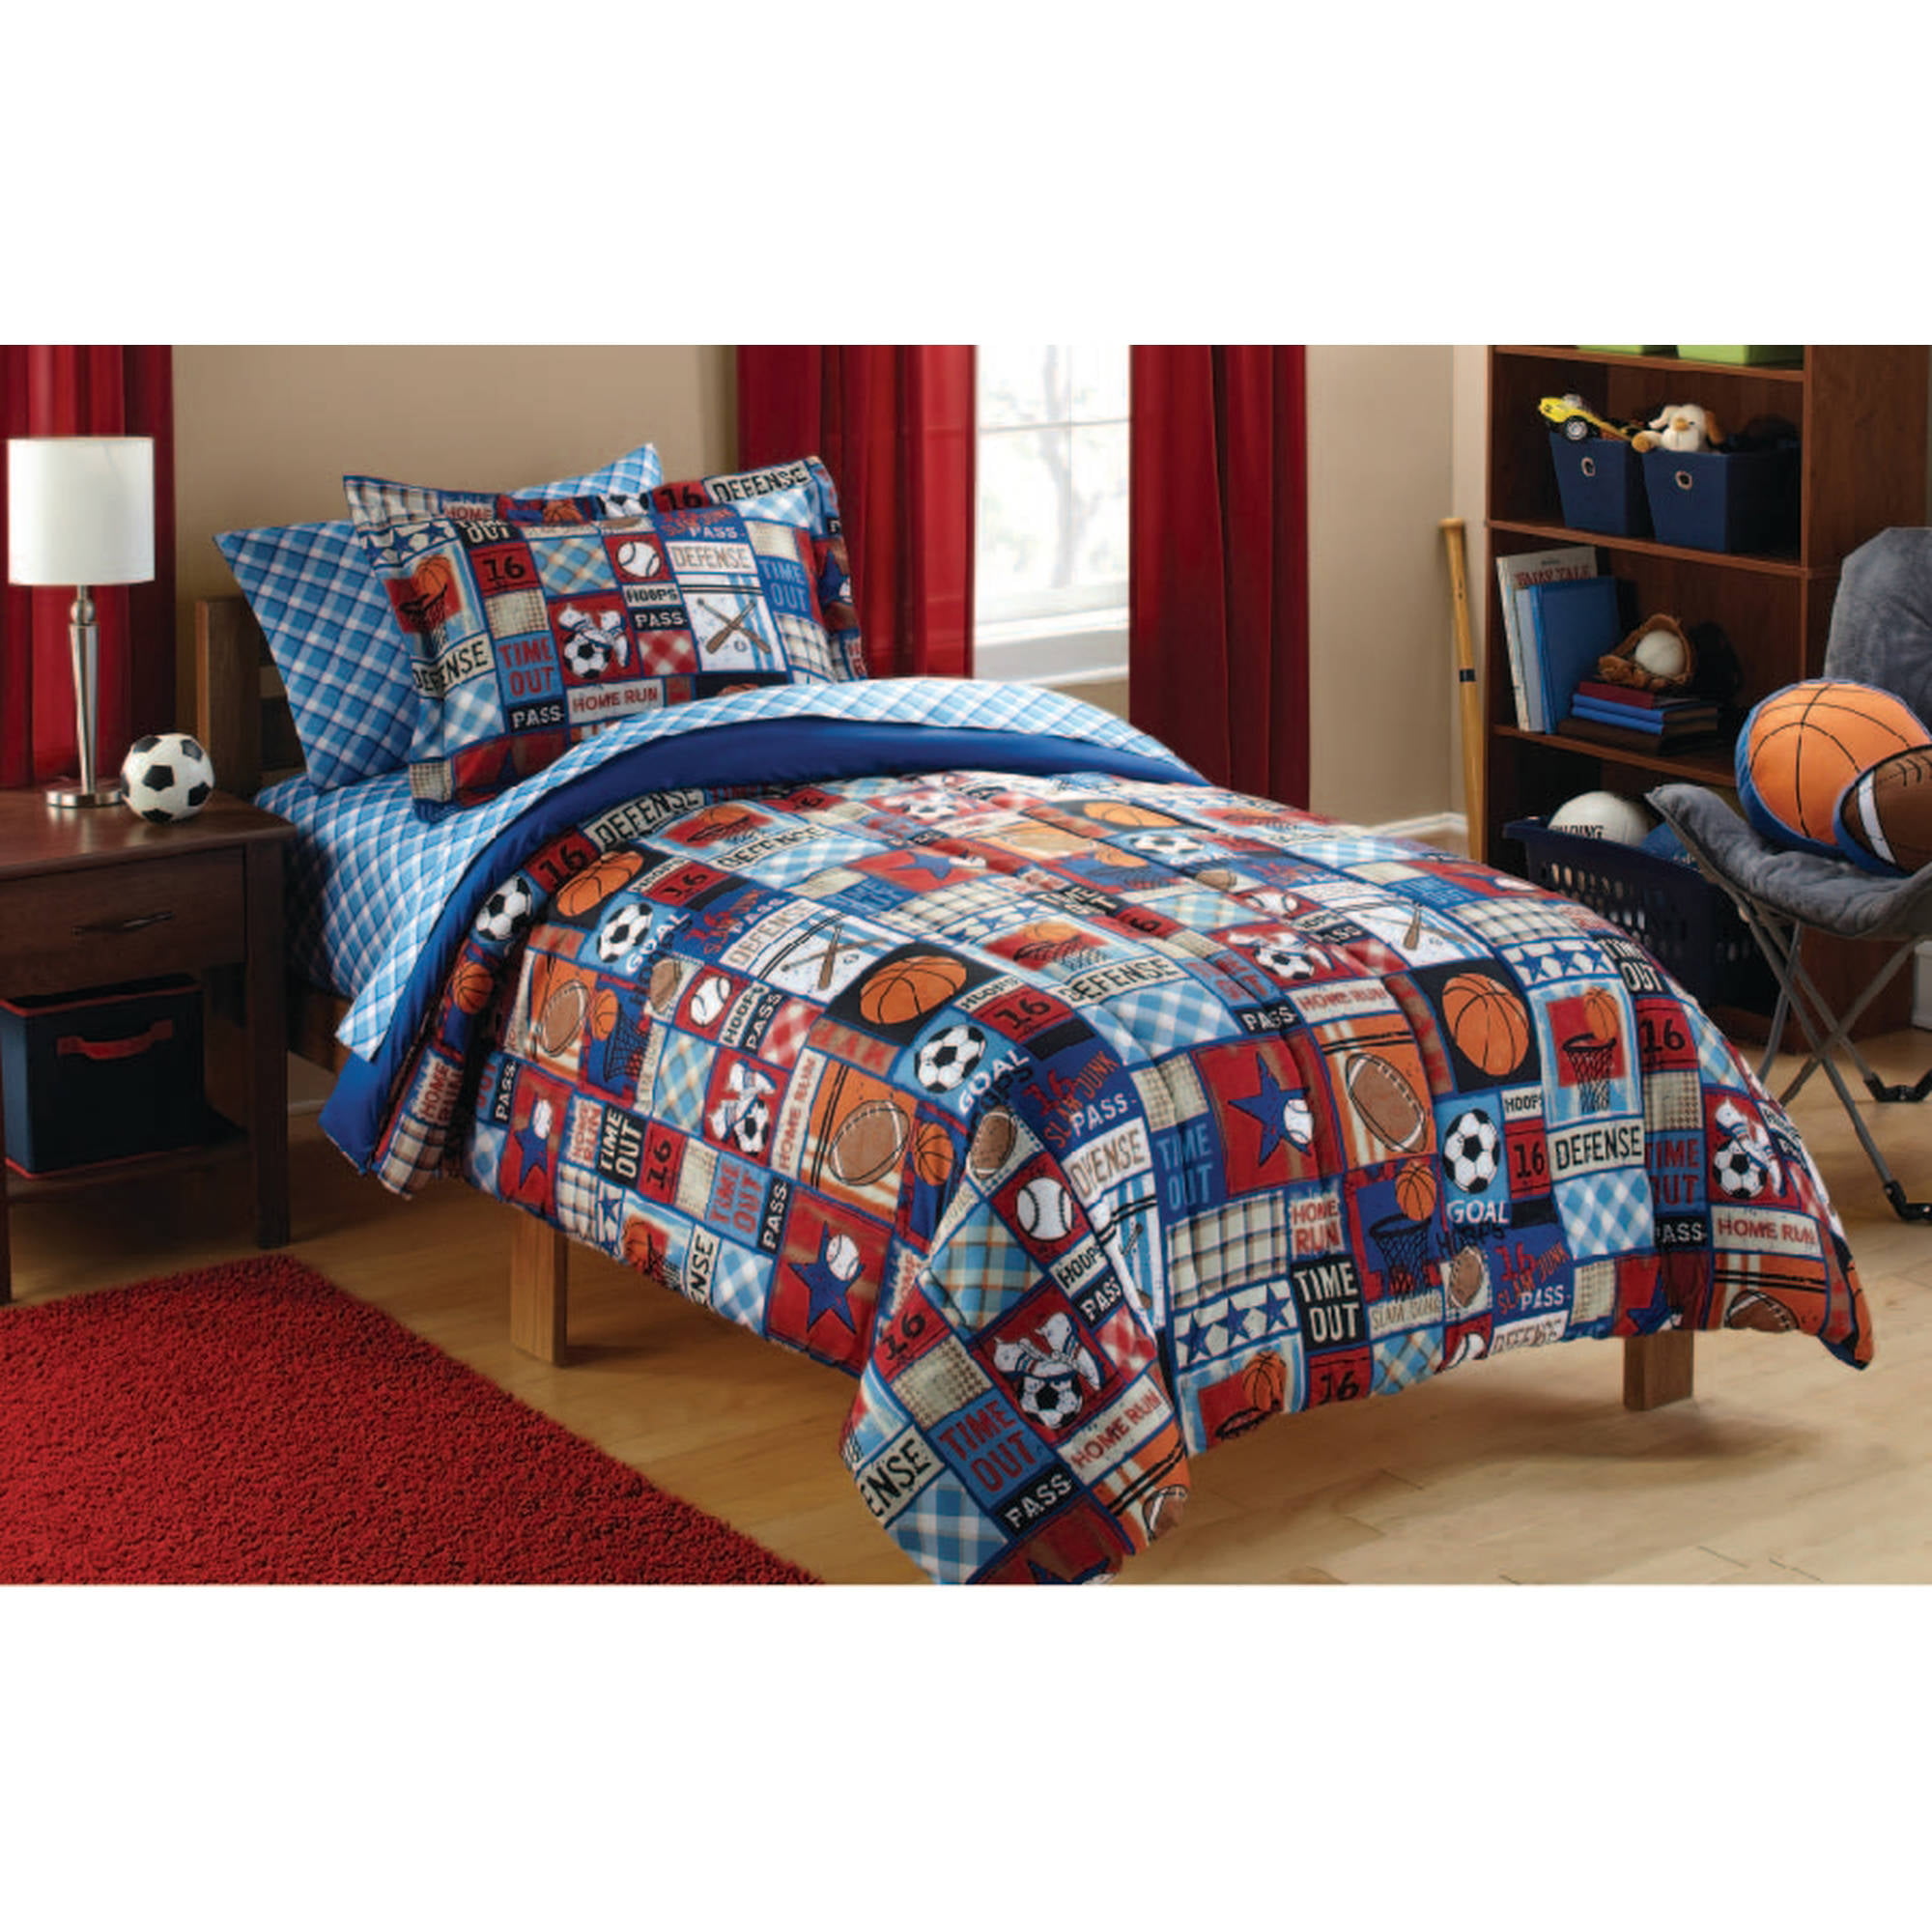 Crayola SPORTS 8Pc Bedding TWIN Comforter Set baseball football cotton blend 